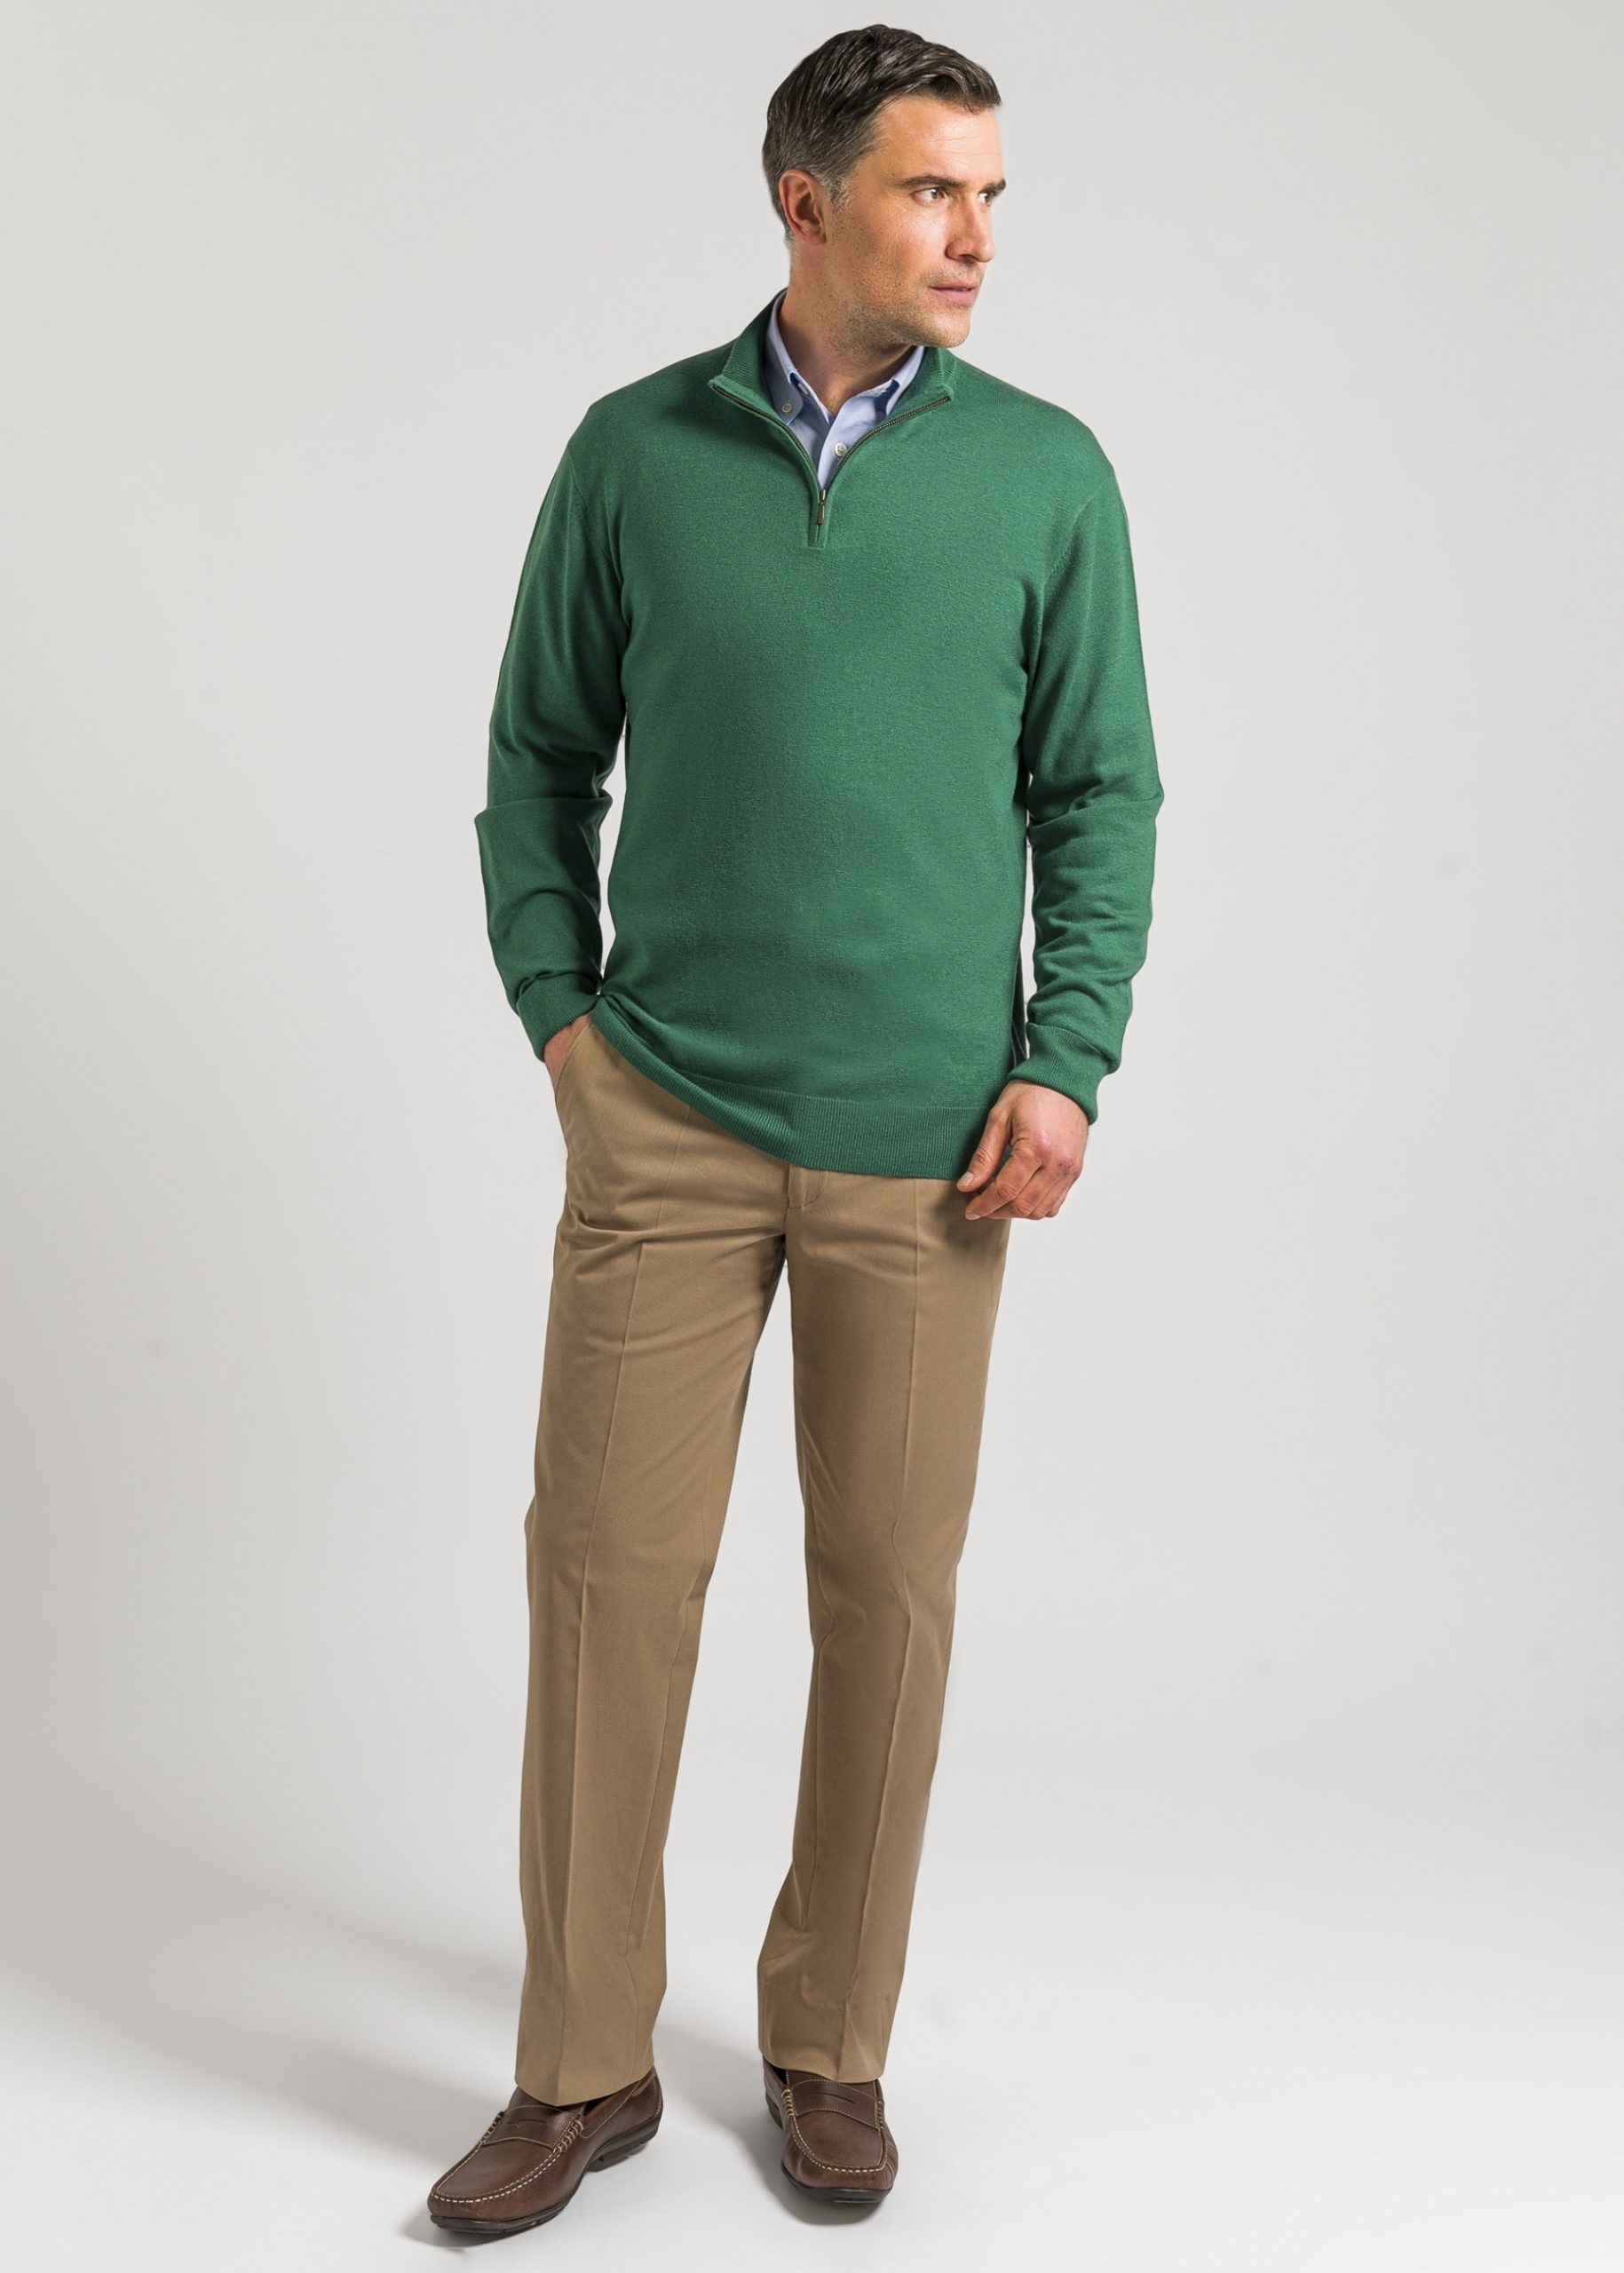 Roderick Charles green quarter zip sweater